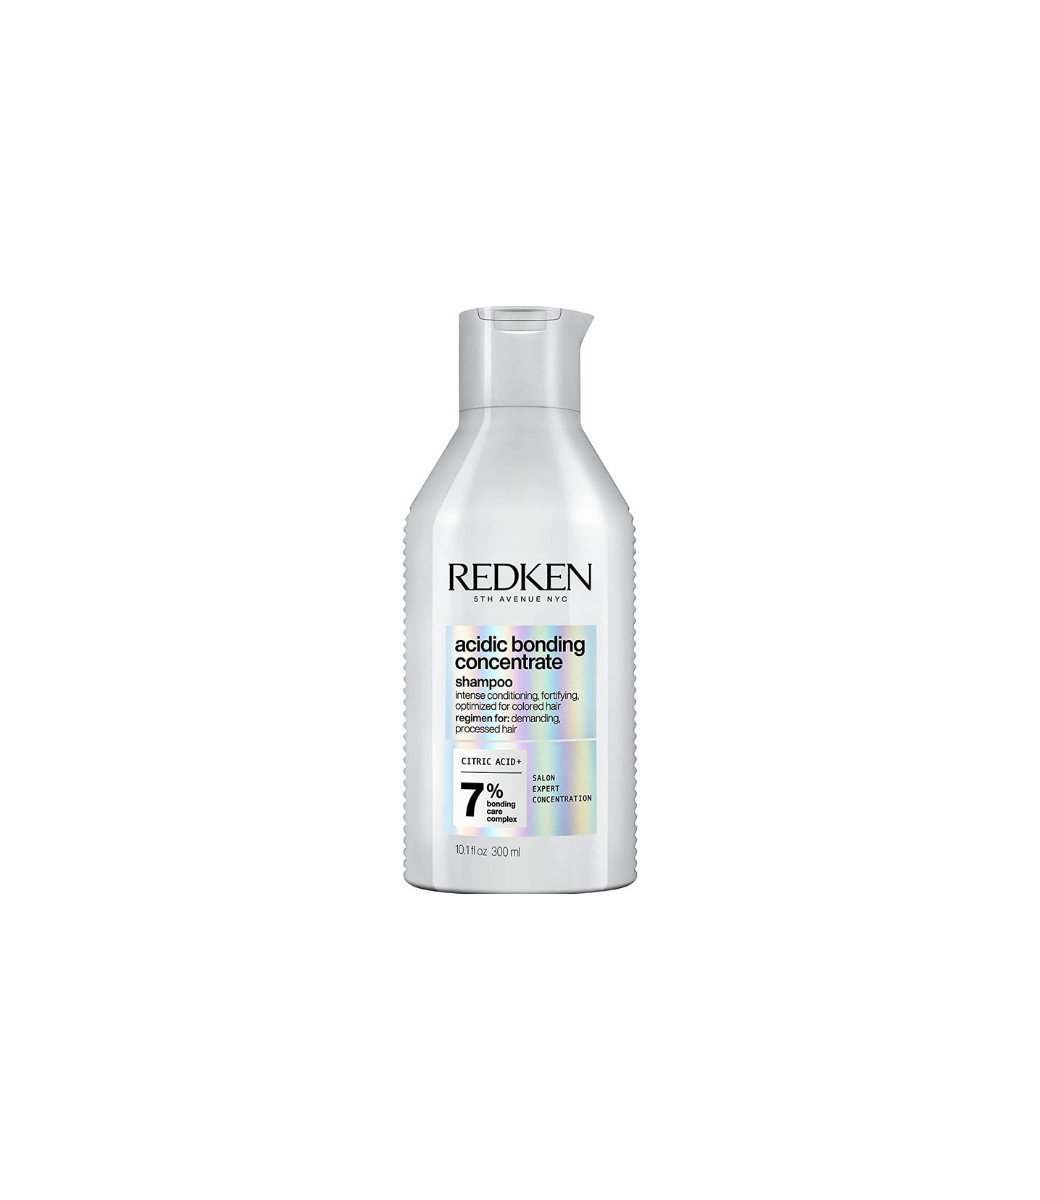 REDKEN 5TH AVENUE NYC REDKEN Acidic Bonding Concentrate Shampoo, 10.1oz